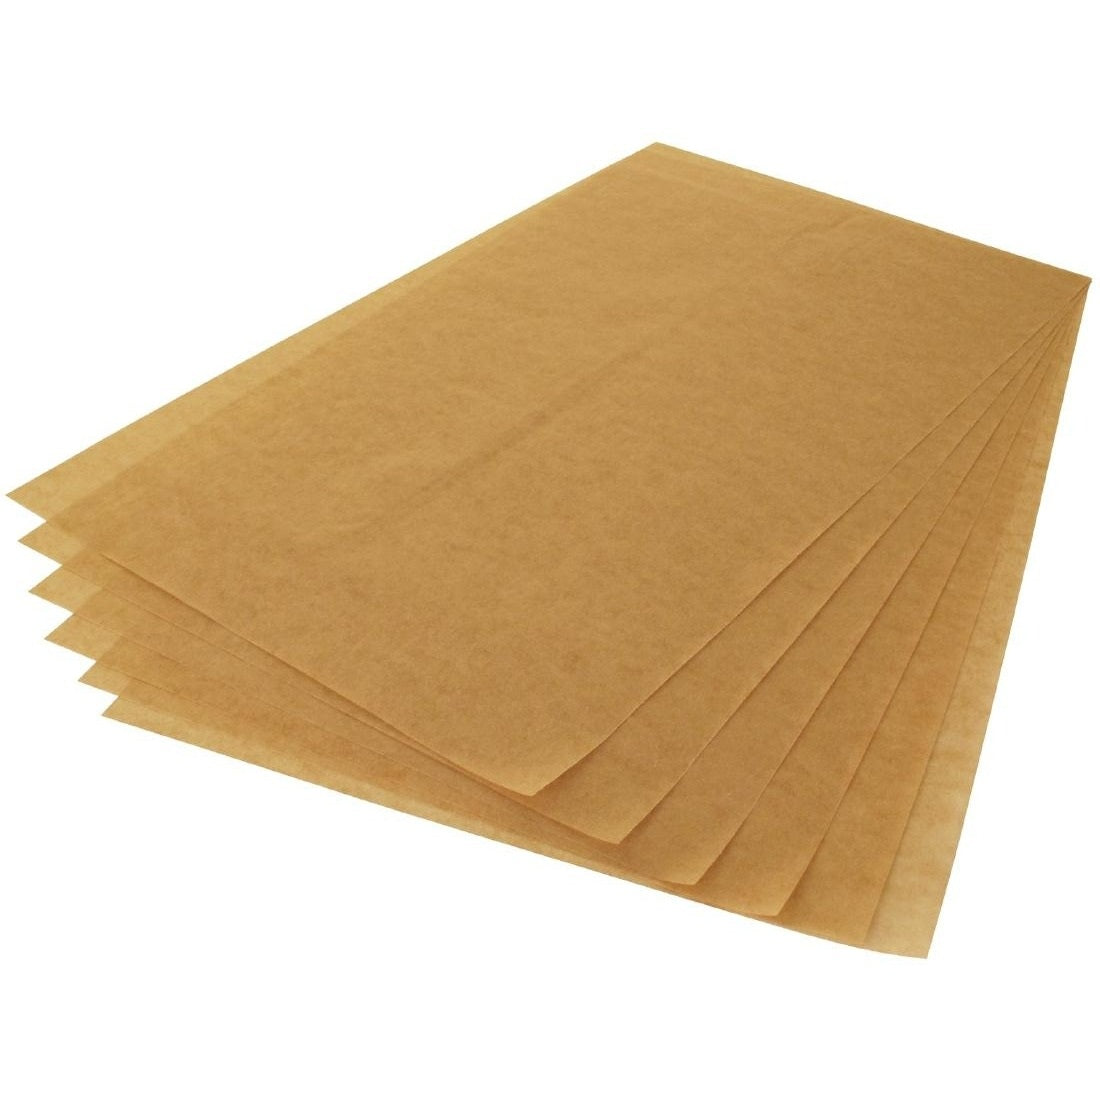 Brown Baking Paper Large Size 4Pcs Pack